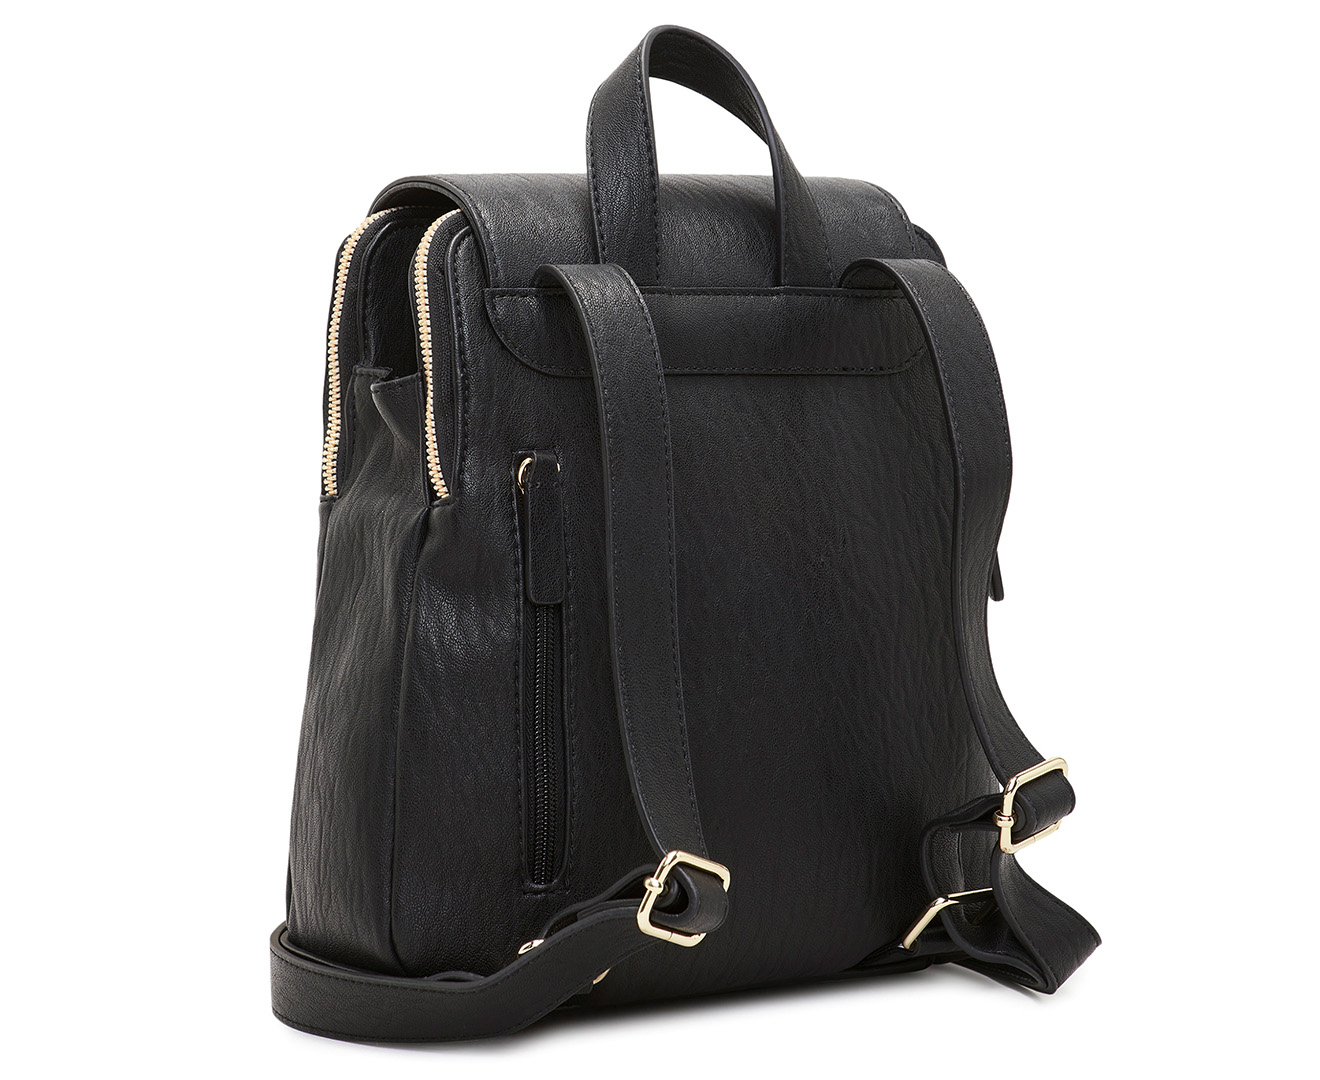 Calvin Klein Gabrianna Backpack - Black/Gold | Catch.co.nz